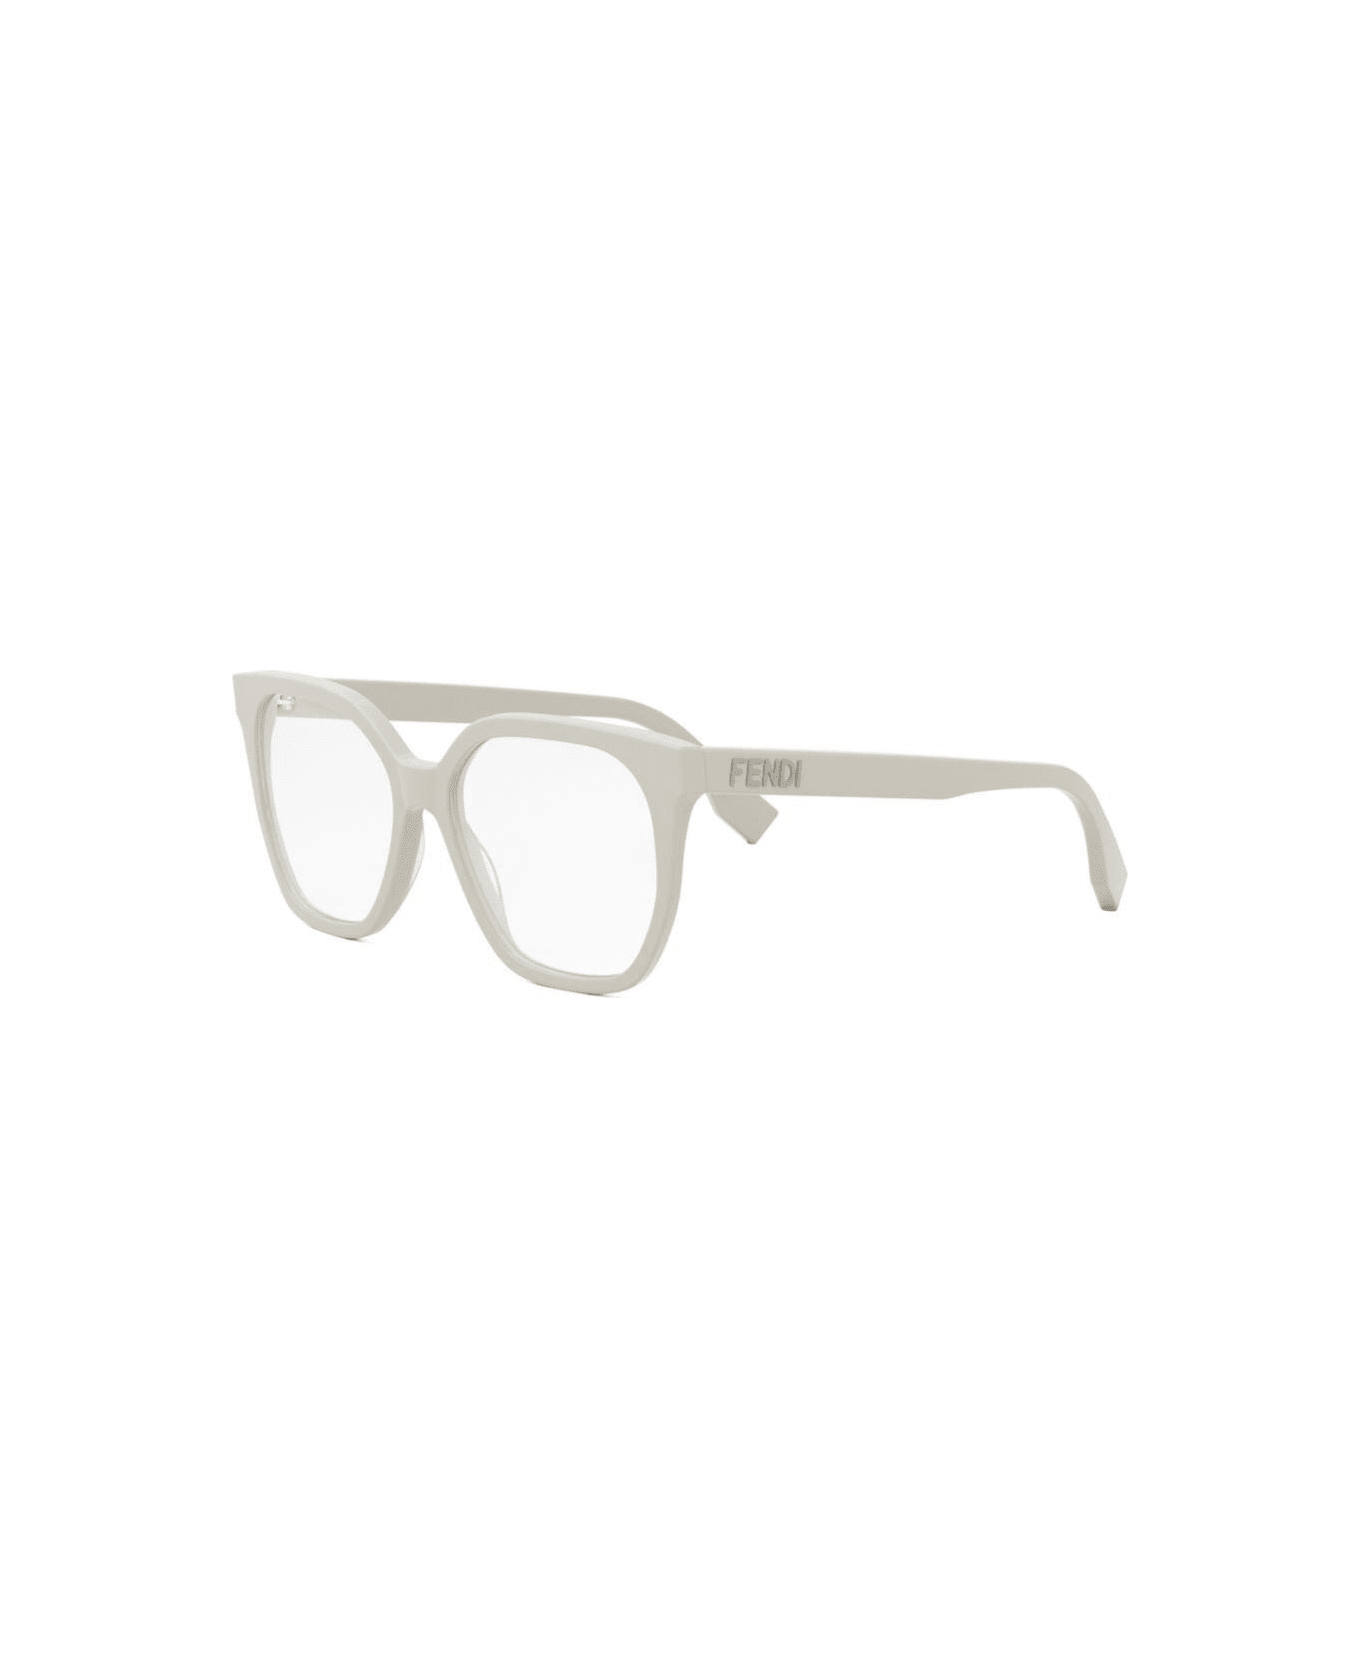 Fendi Eyewear Square Frame Glasses - 057